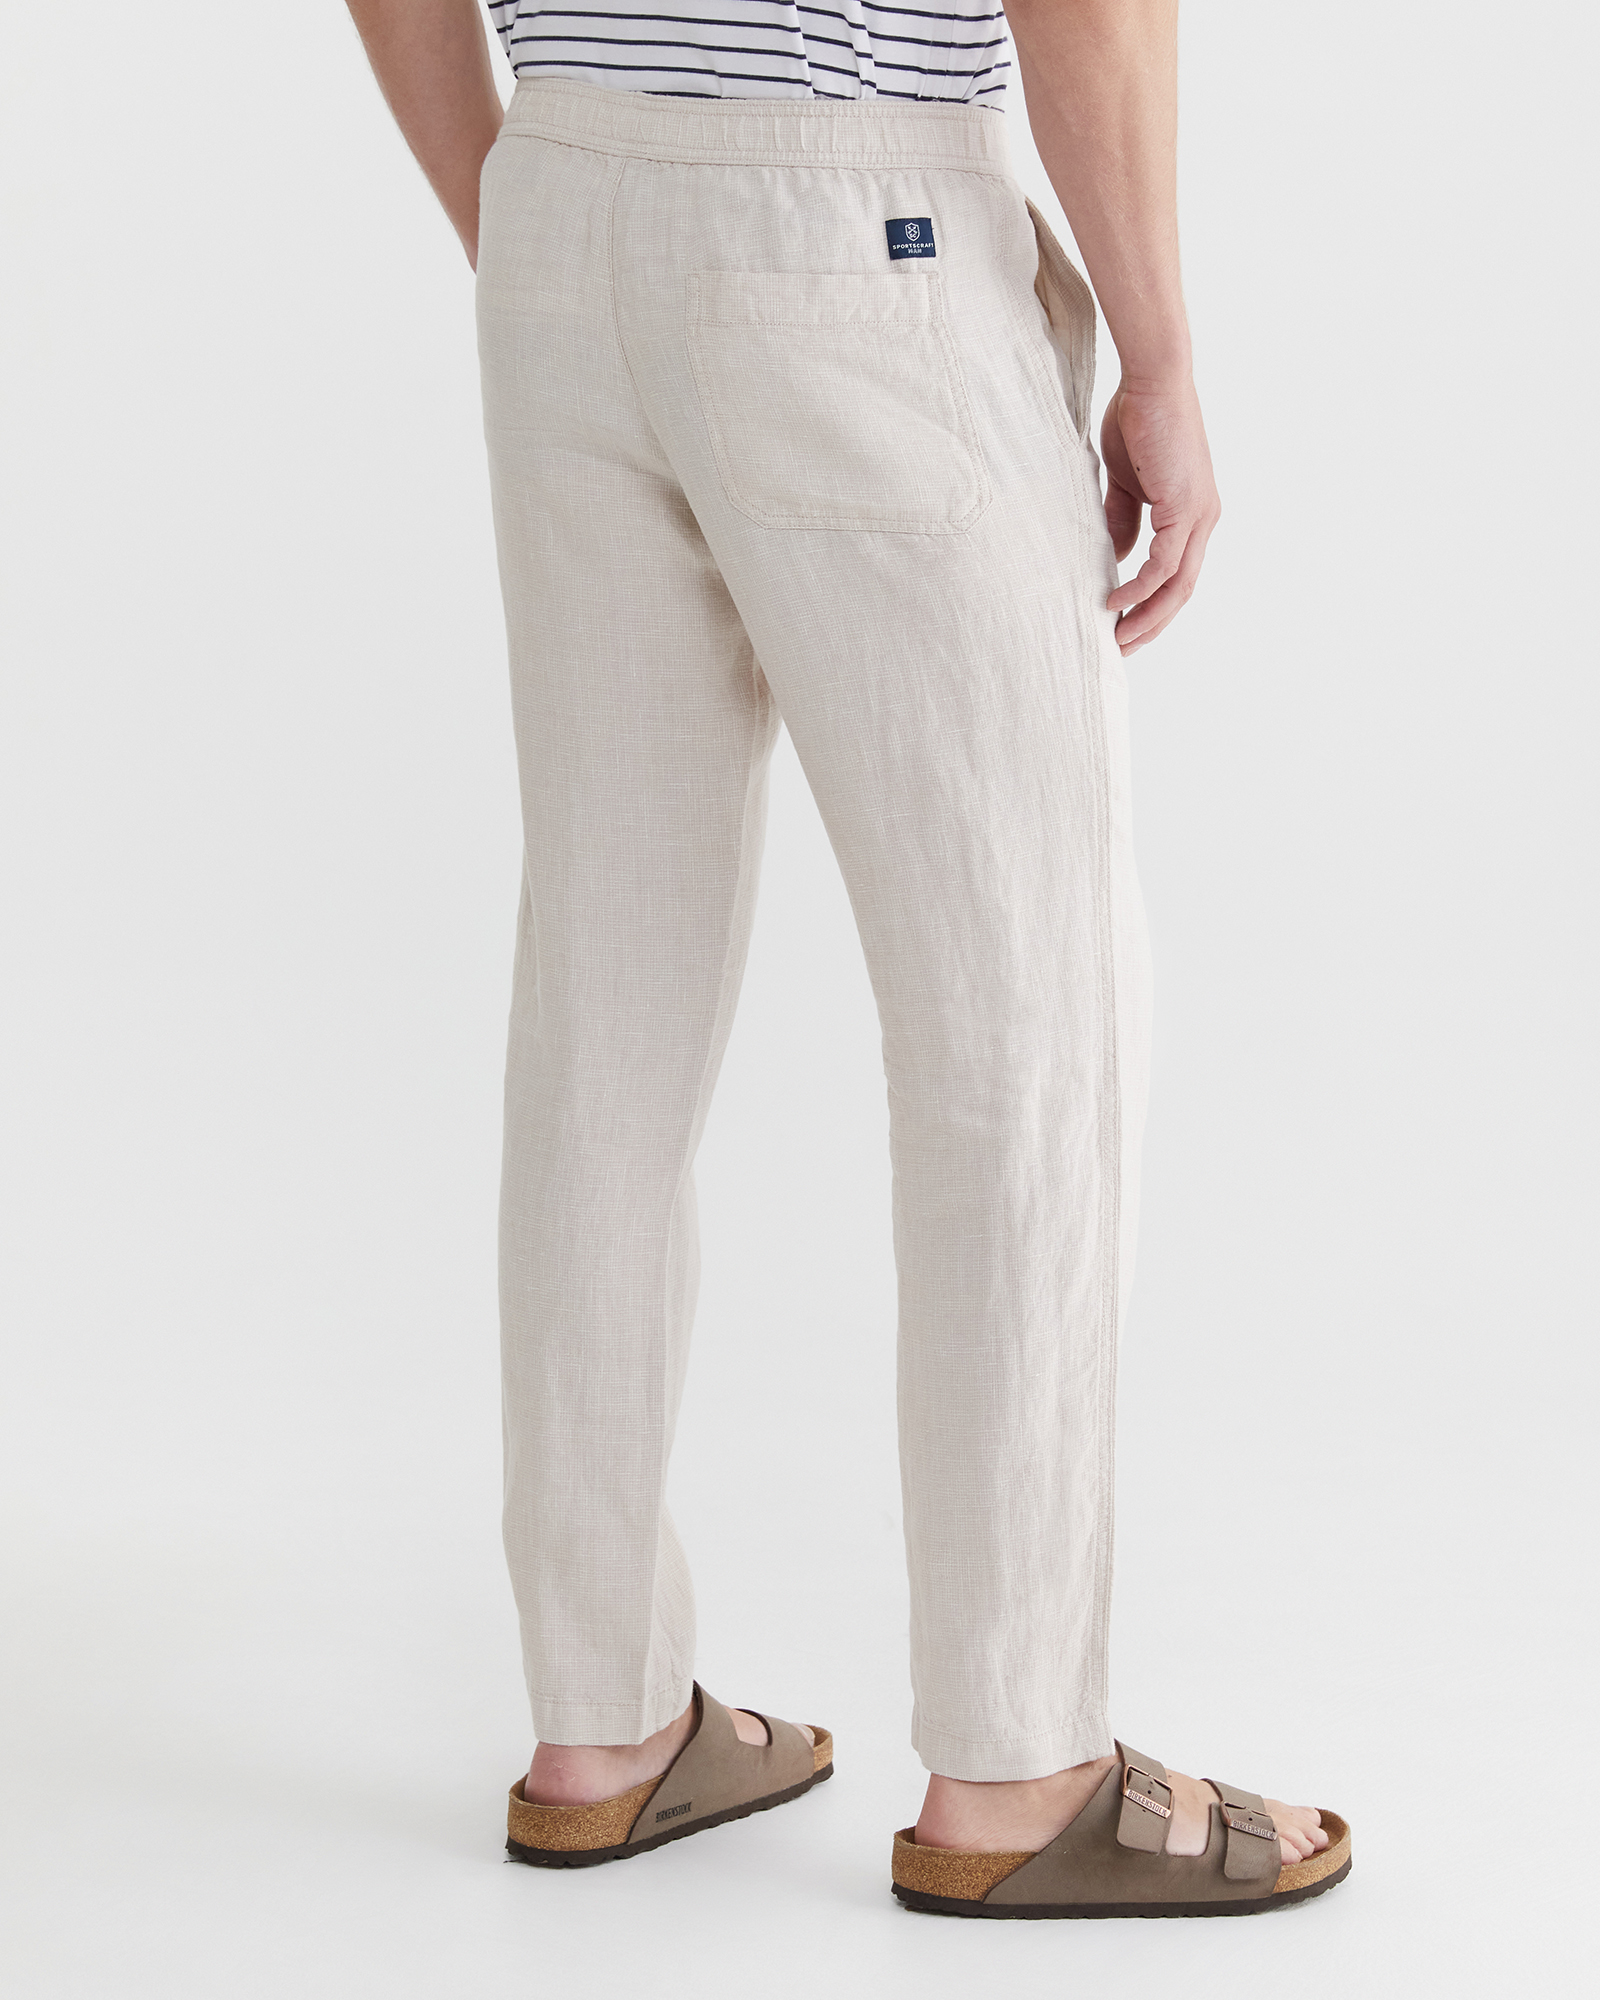 Mens White Linen Pants Australia | Shop Online | MYER